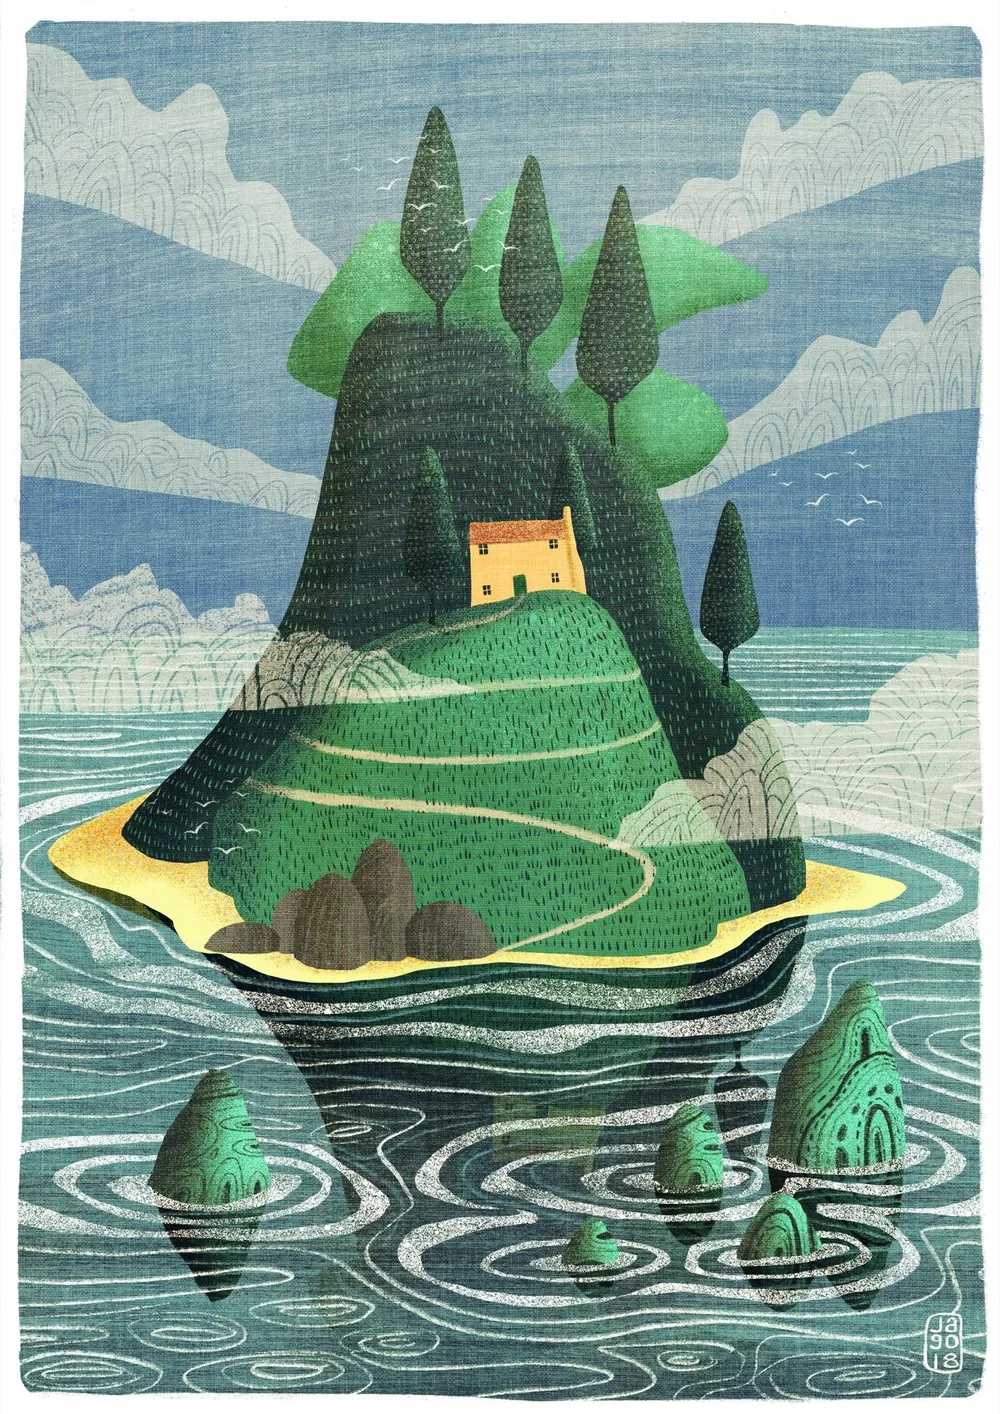 trees and island illustration